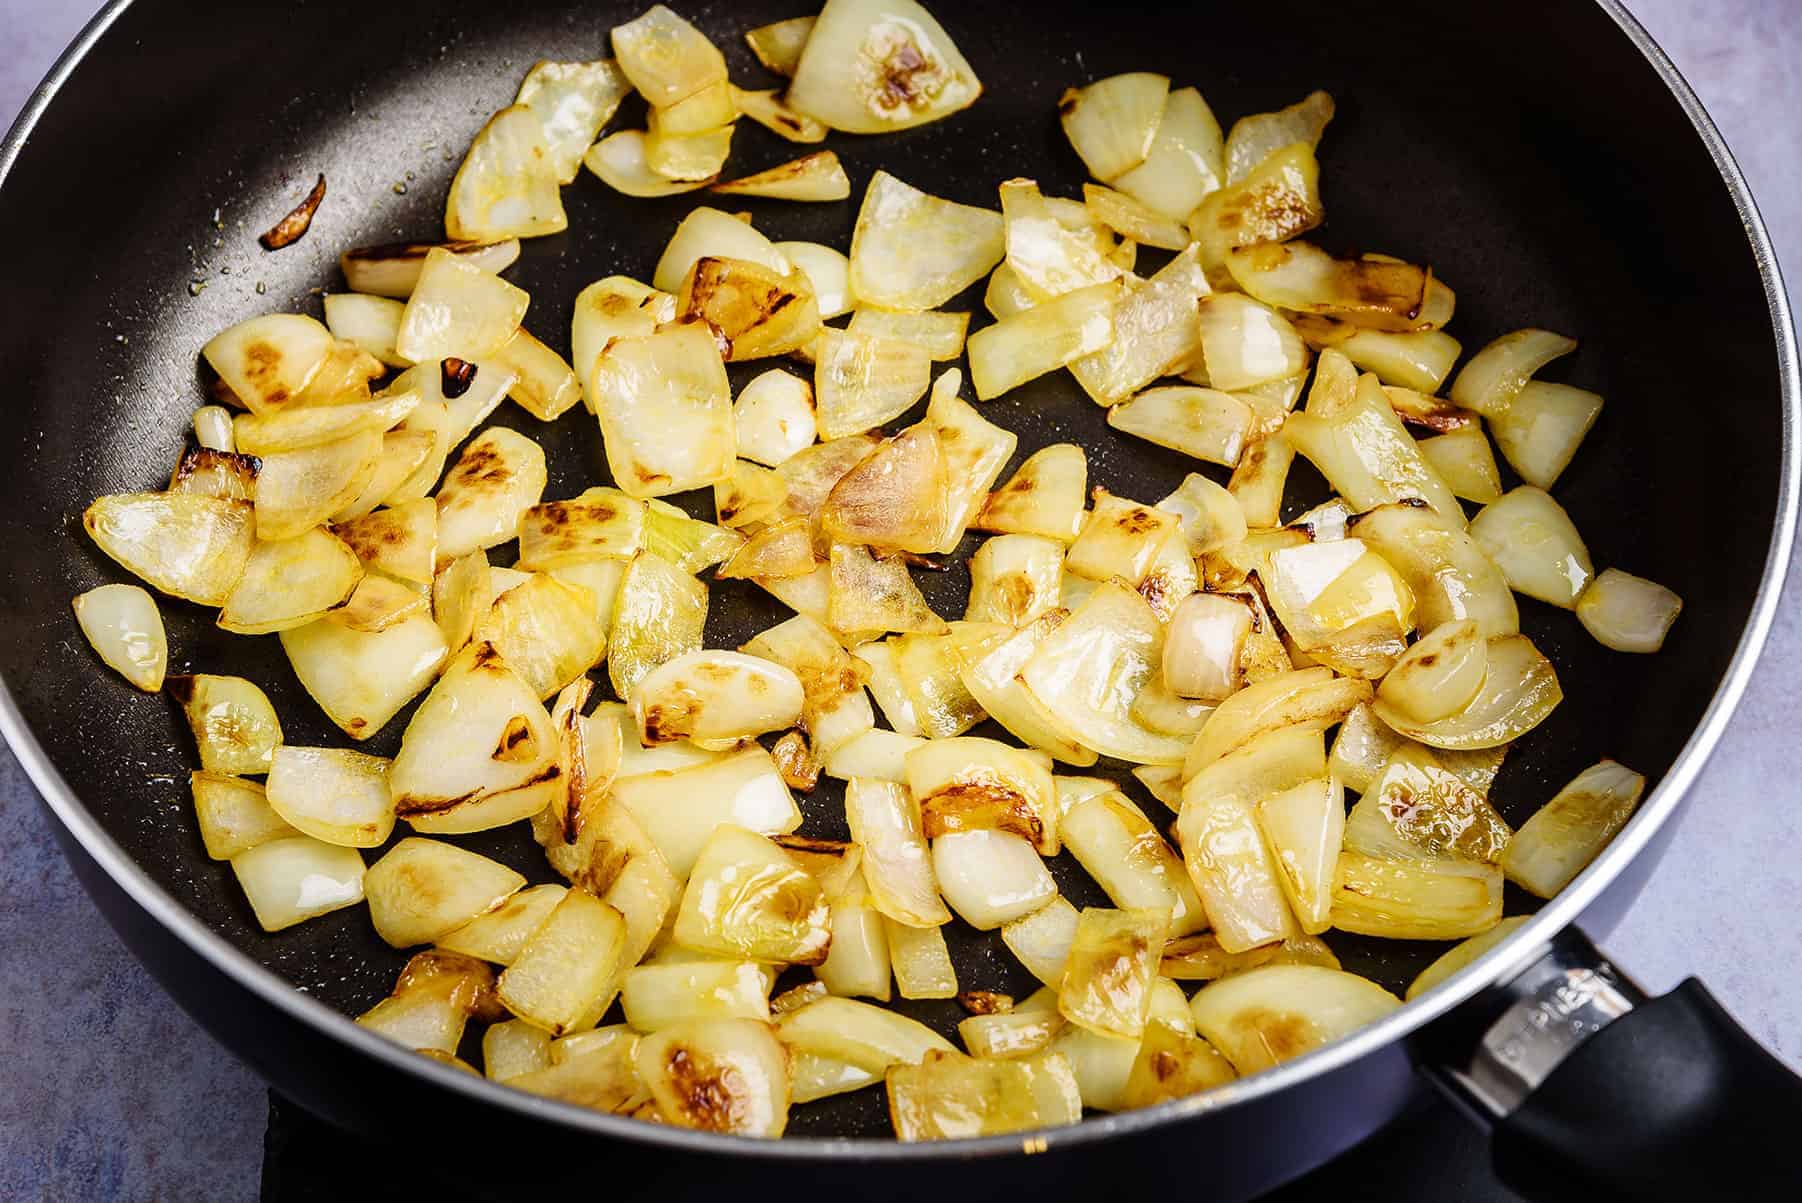 Onions frying in a pan